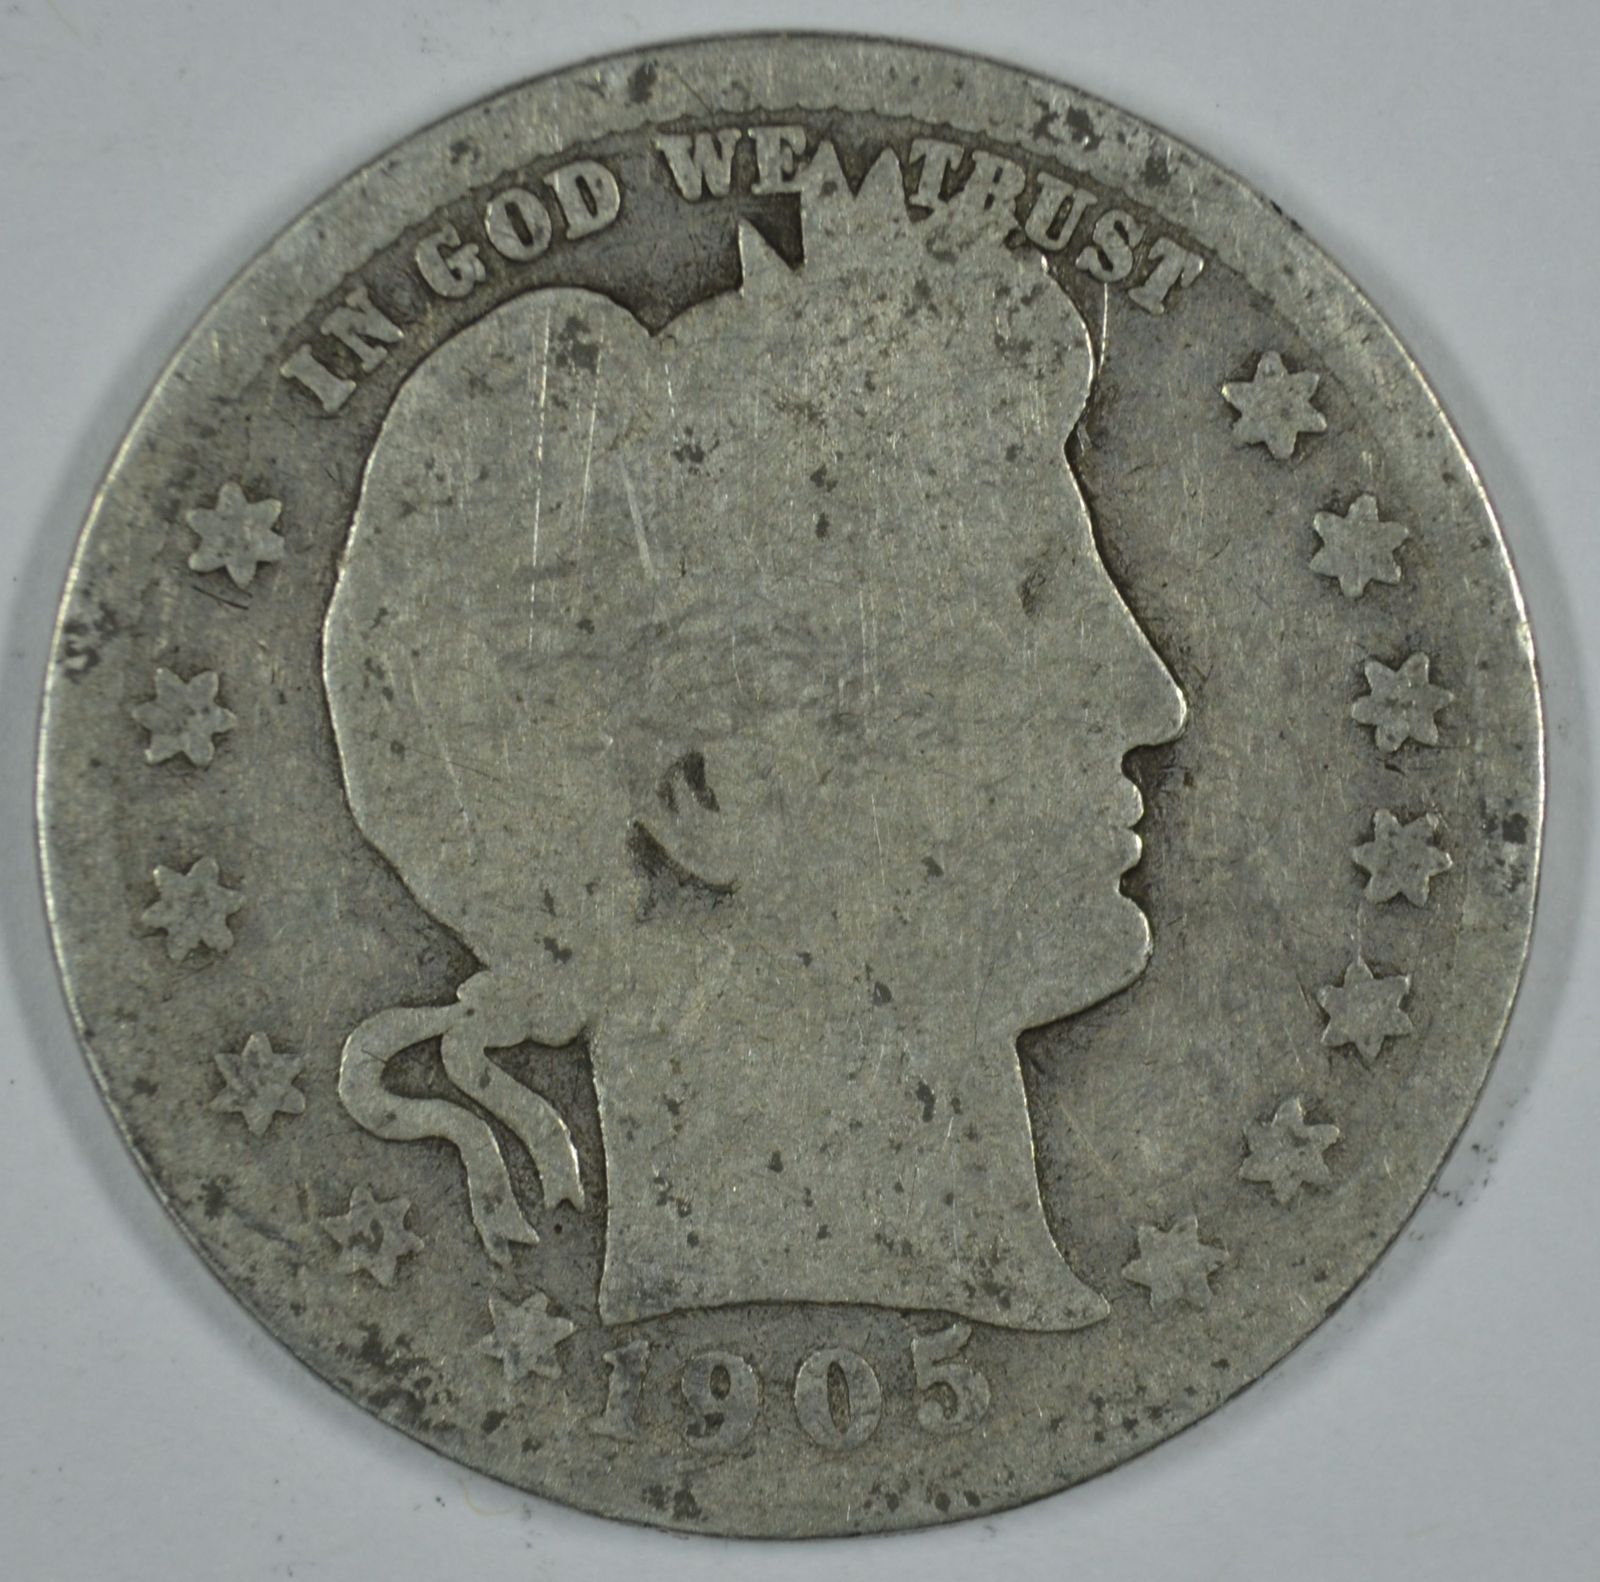 1905 P Barber circulated silver quarter - $23.00